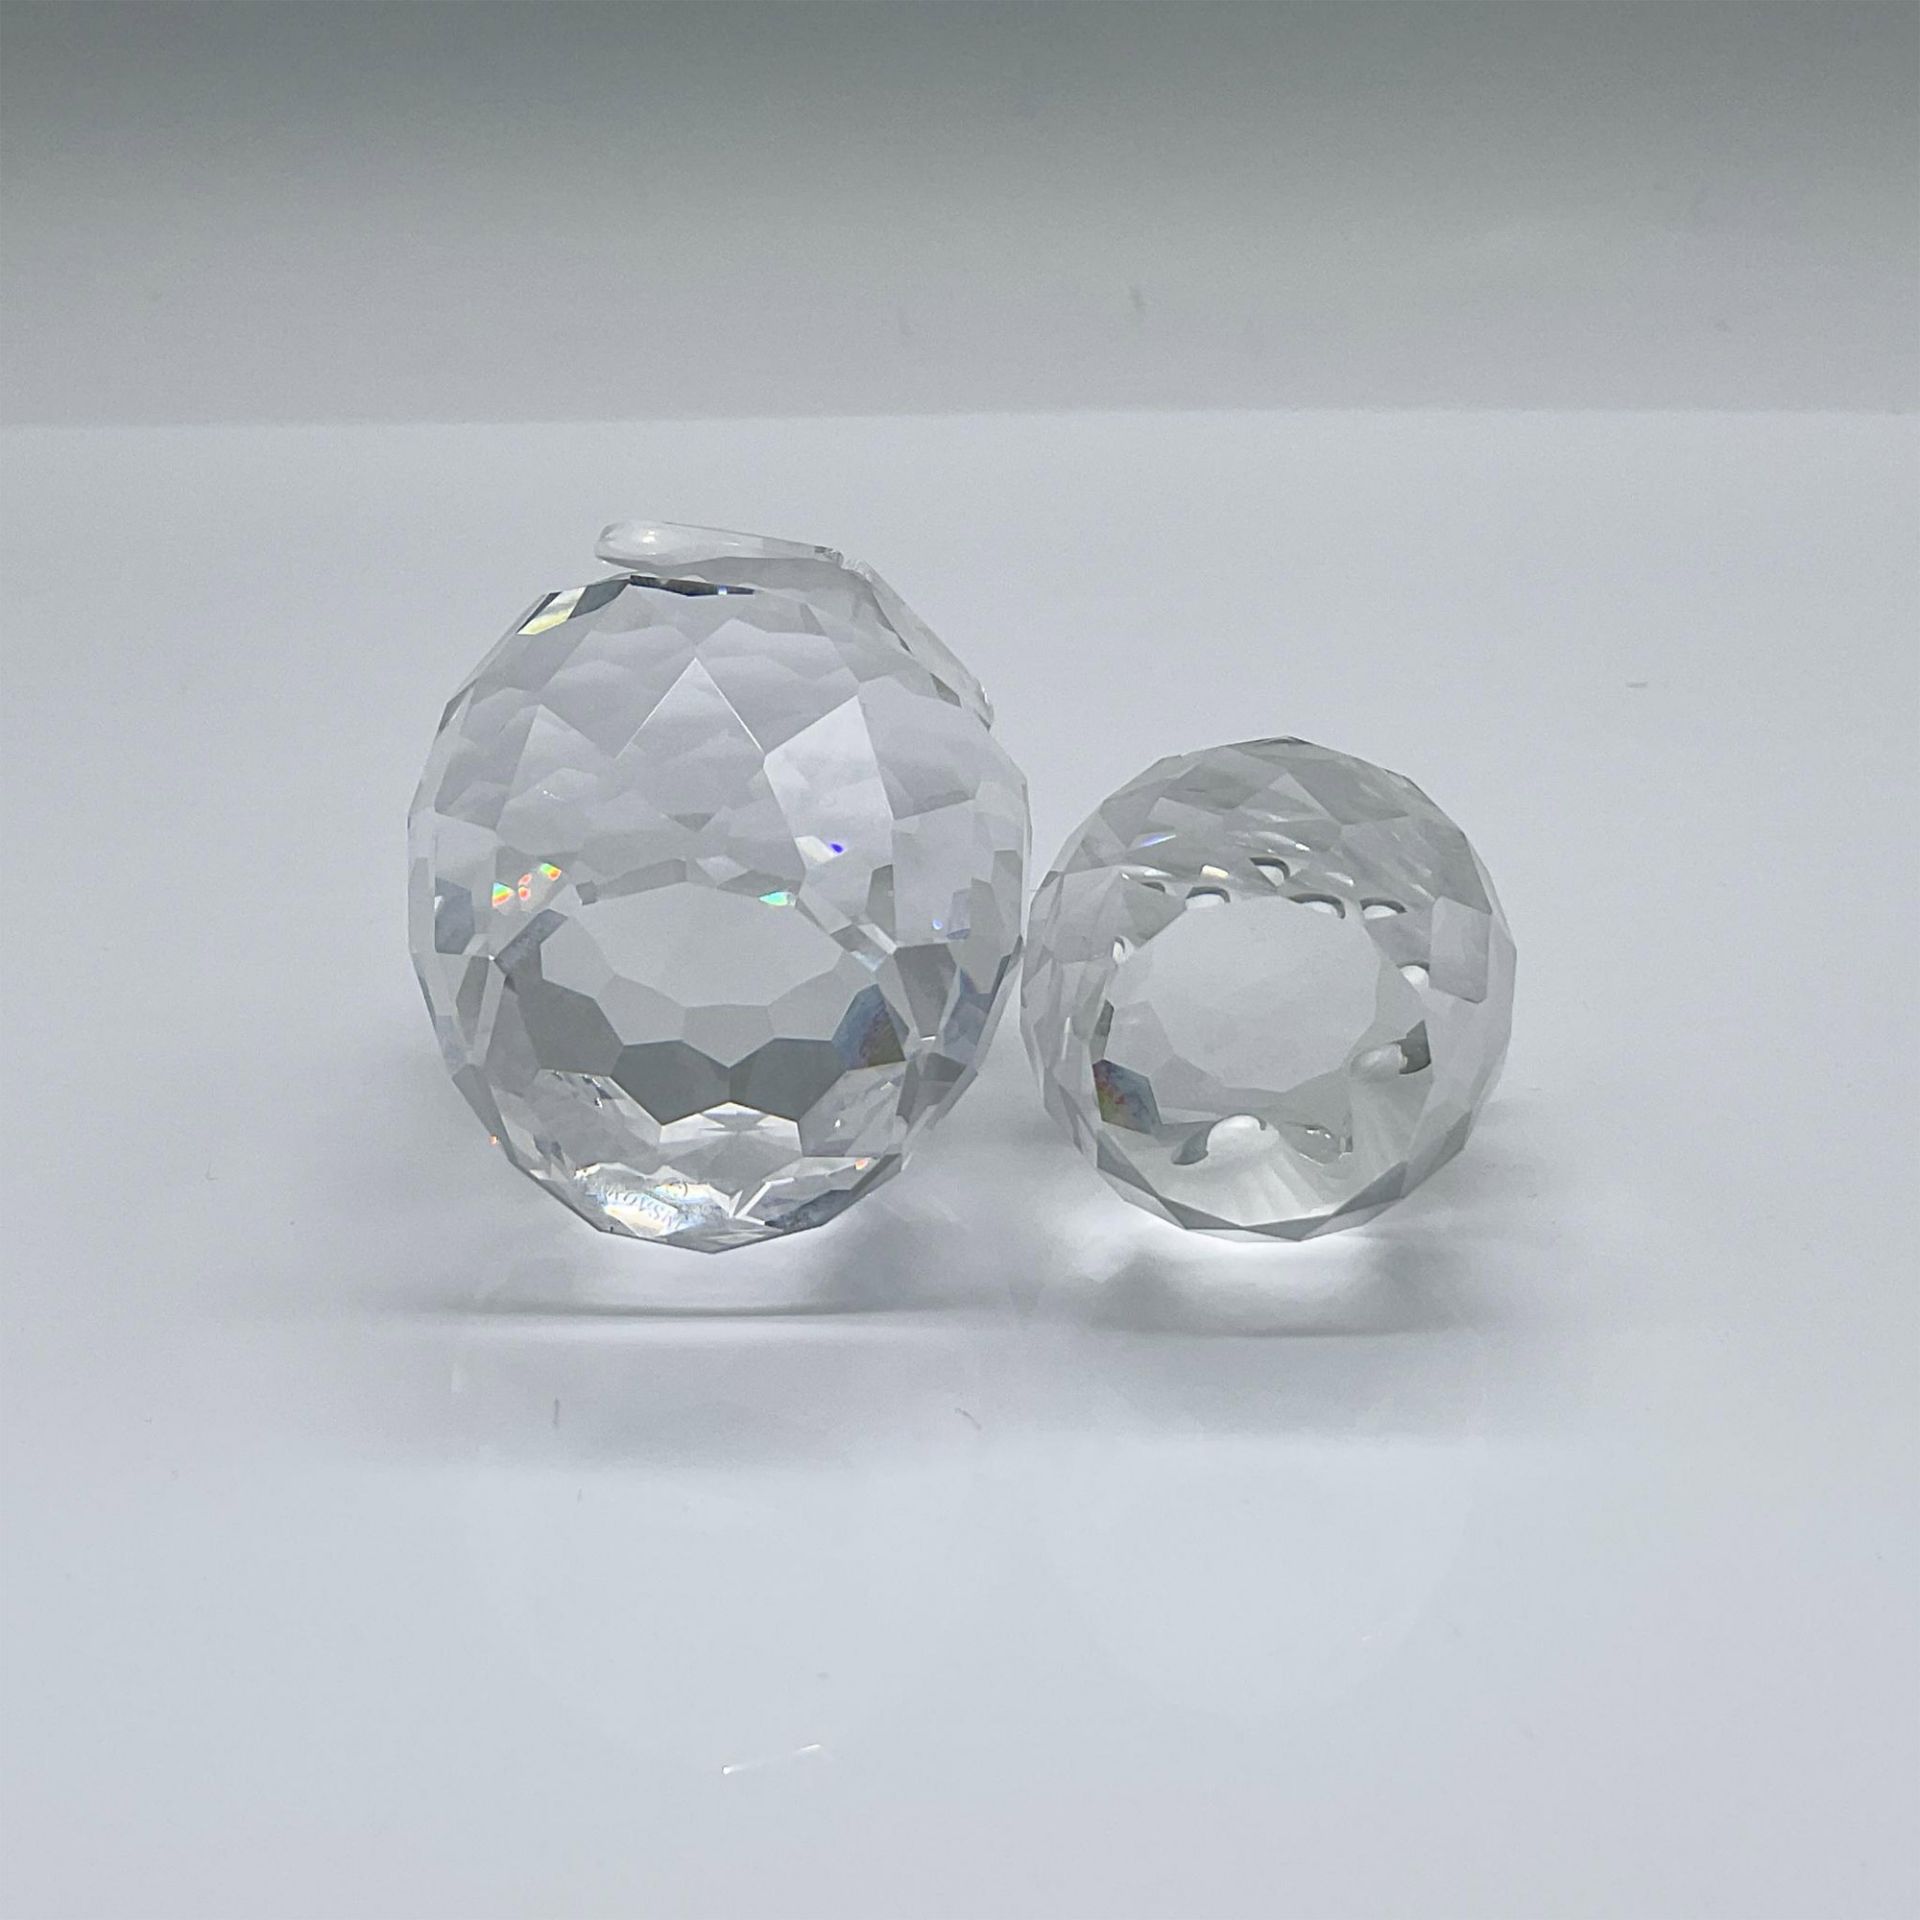 2pc Swarovski Crystal Figurines, Large and Small Owl - Image 3 of 3